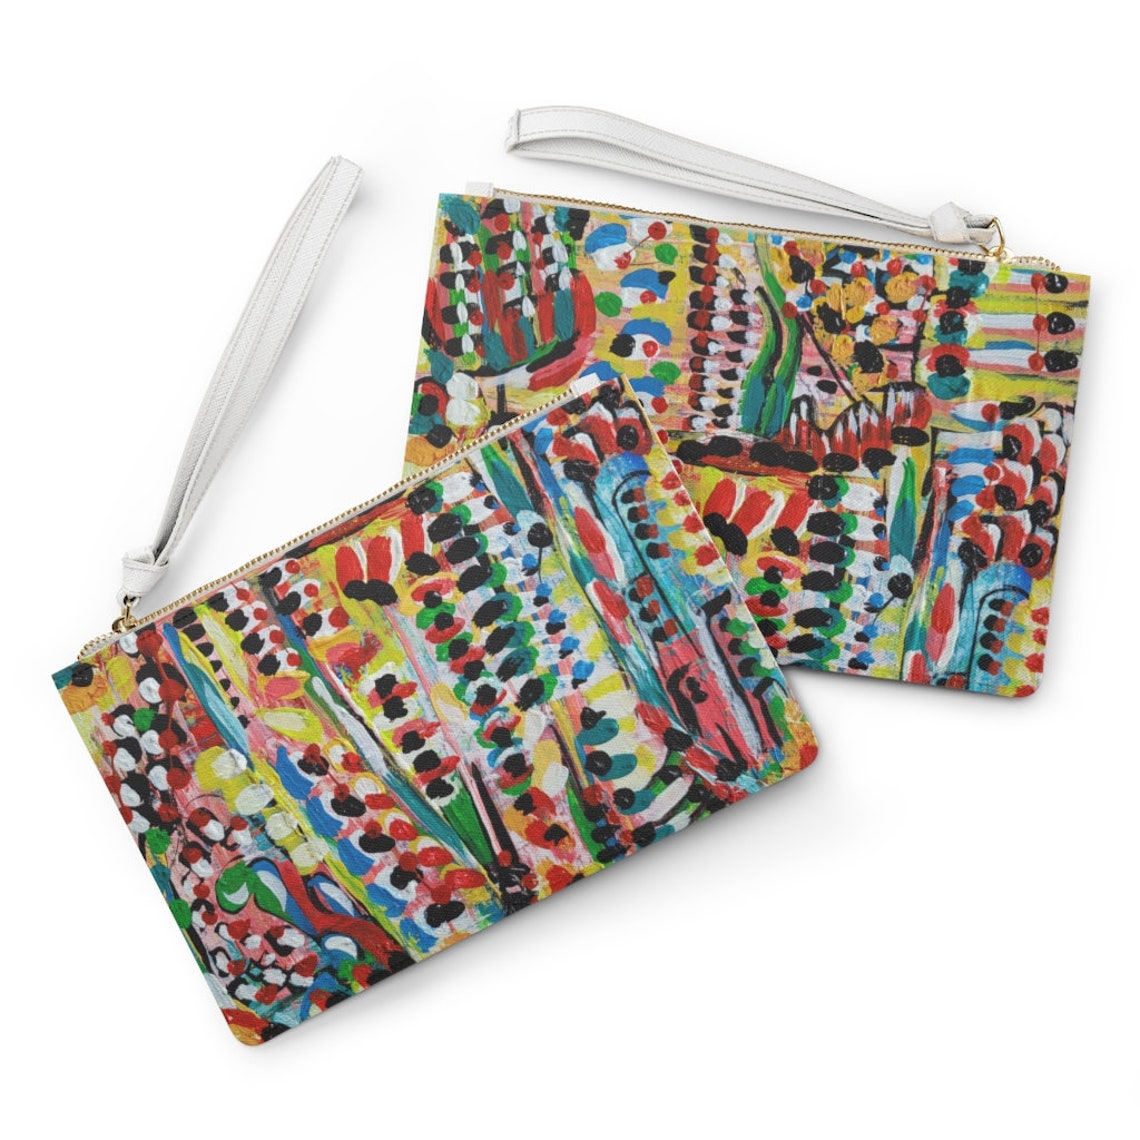 Yayoi Kusama Style Clutch Bag Purse Handbag | Etsy